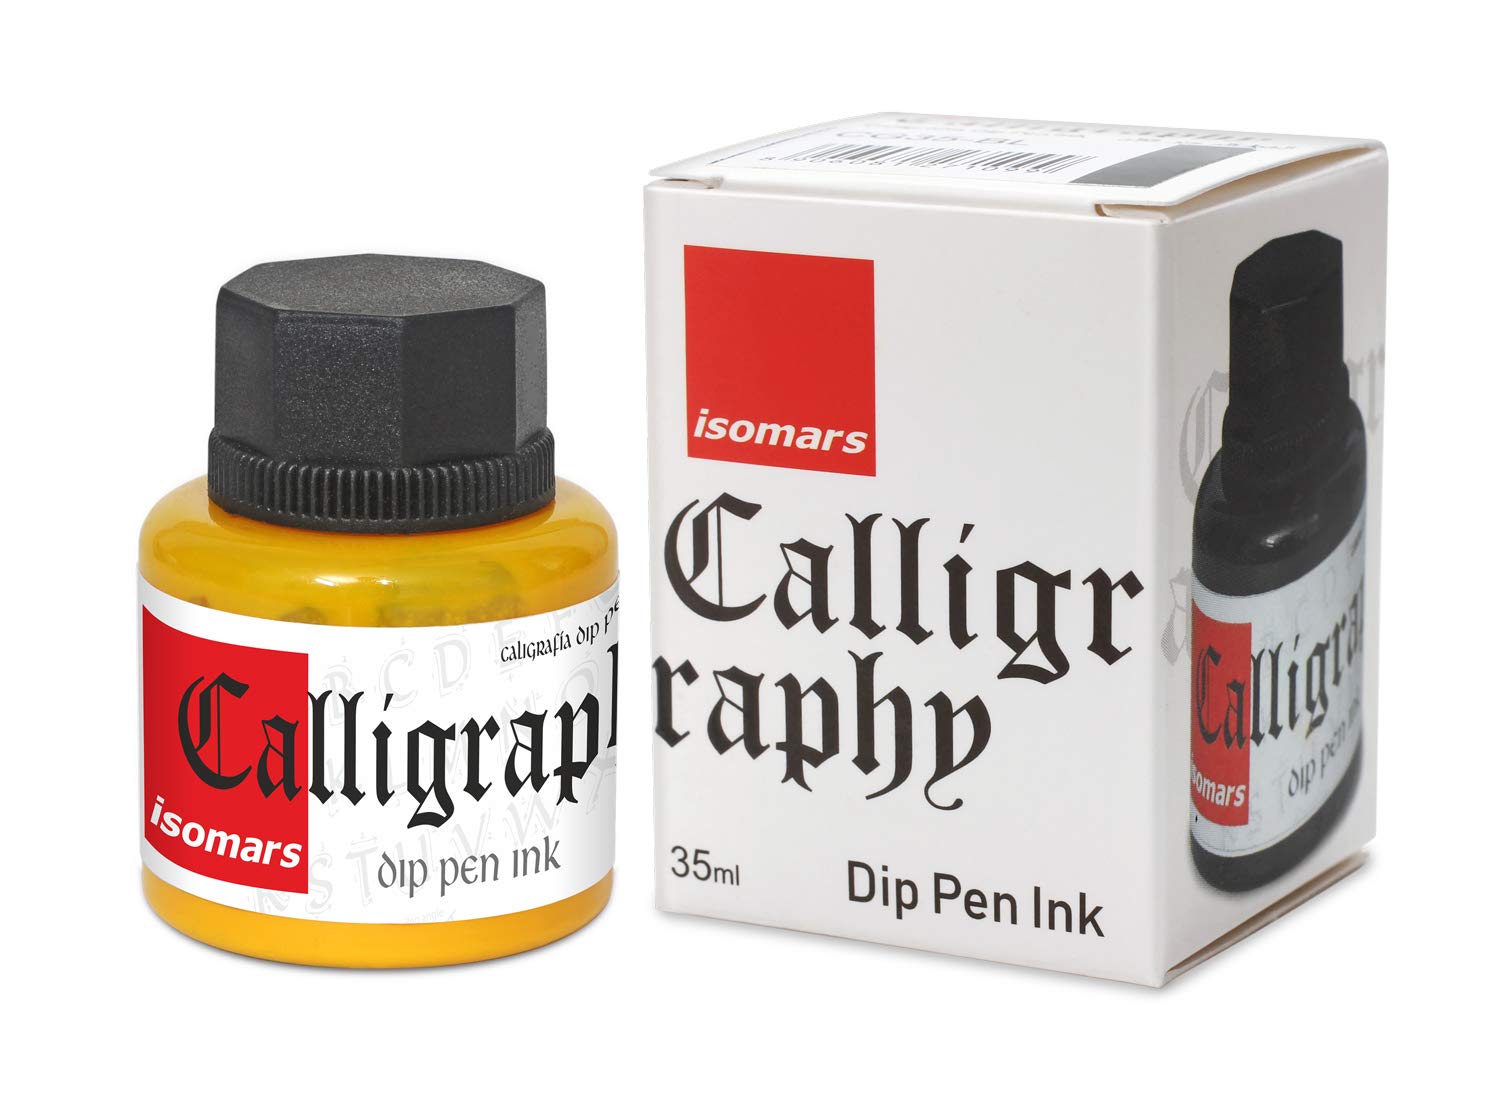 Isomars Calligraphy Dip Pen Ink 35ml - Yellow